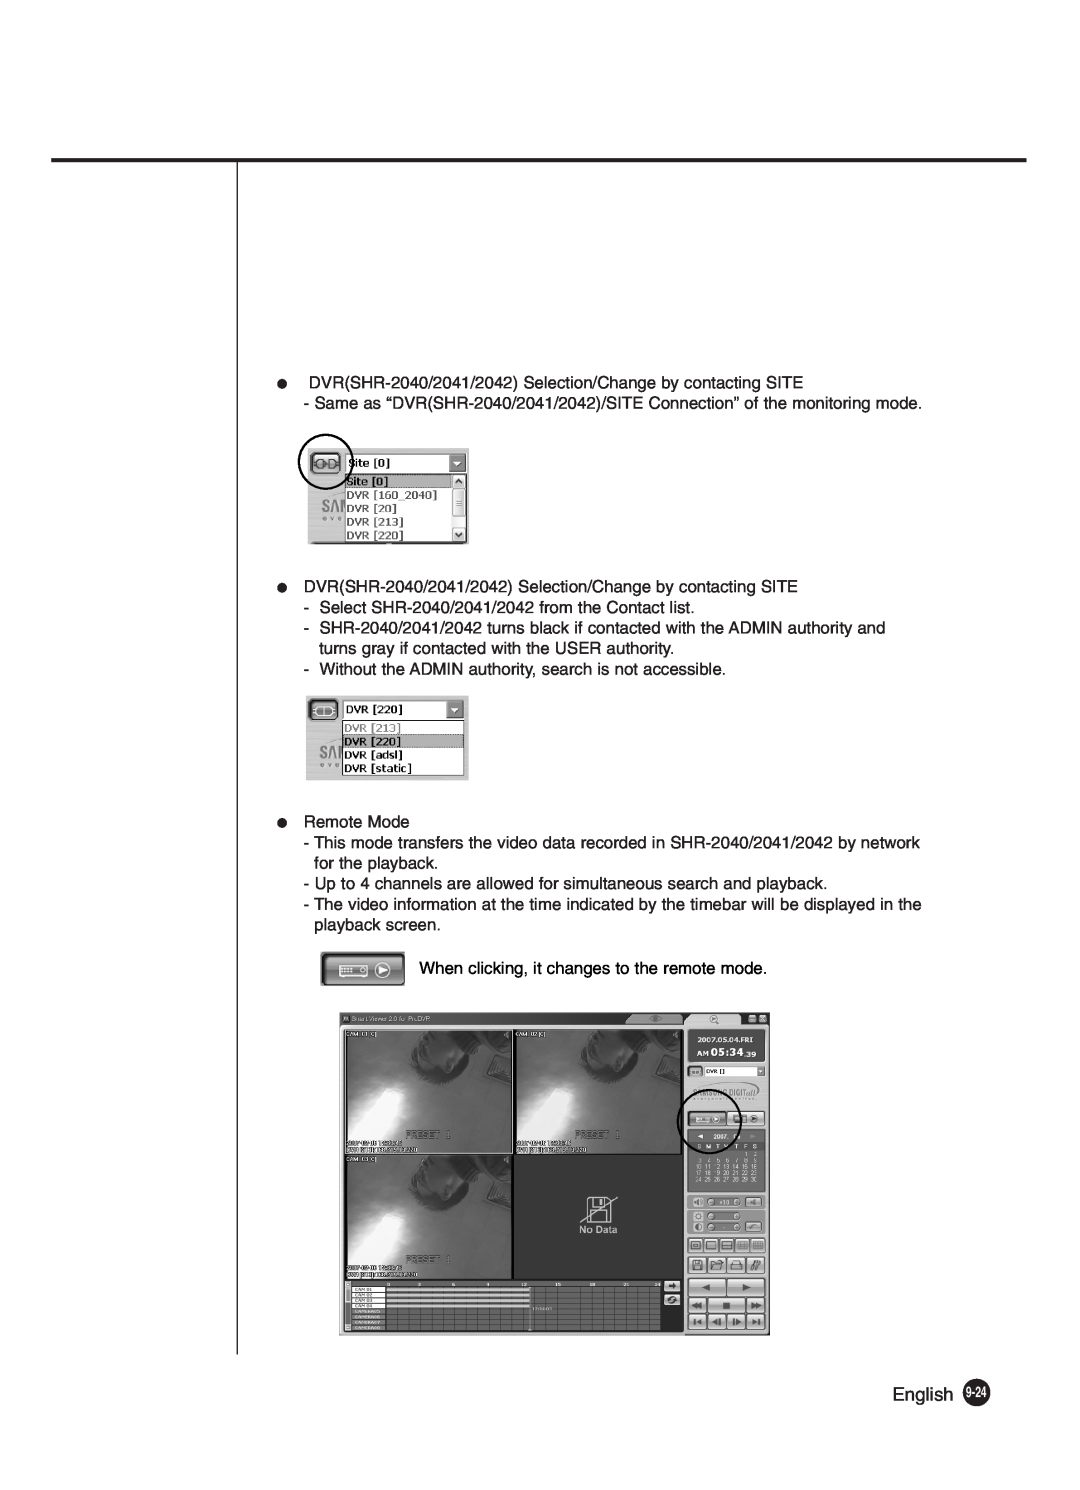 Samsung SHR-2040P250, SHR-2042P250 manual English 